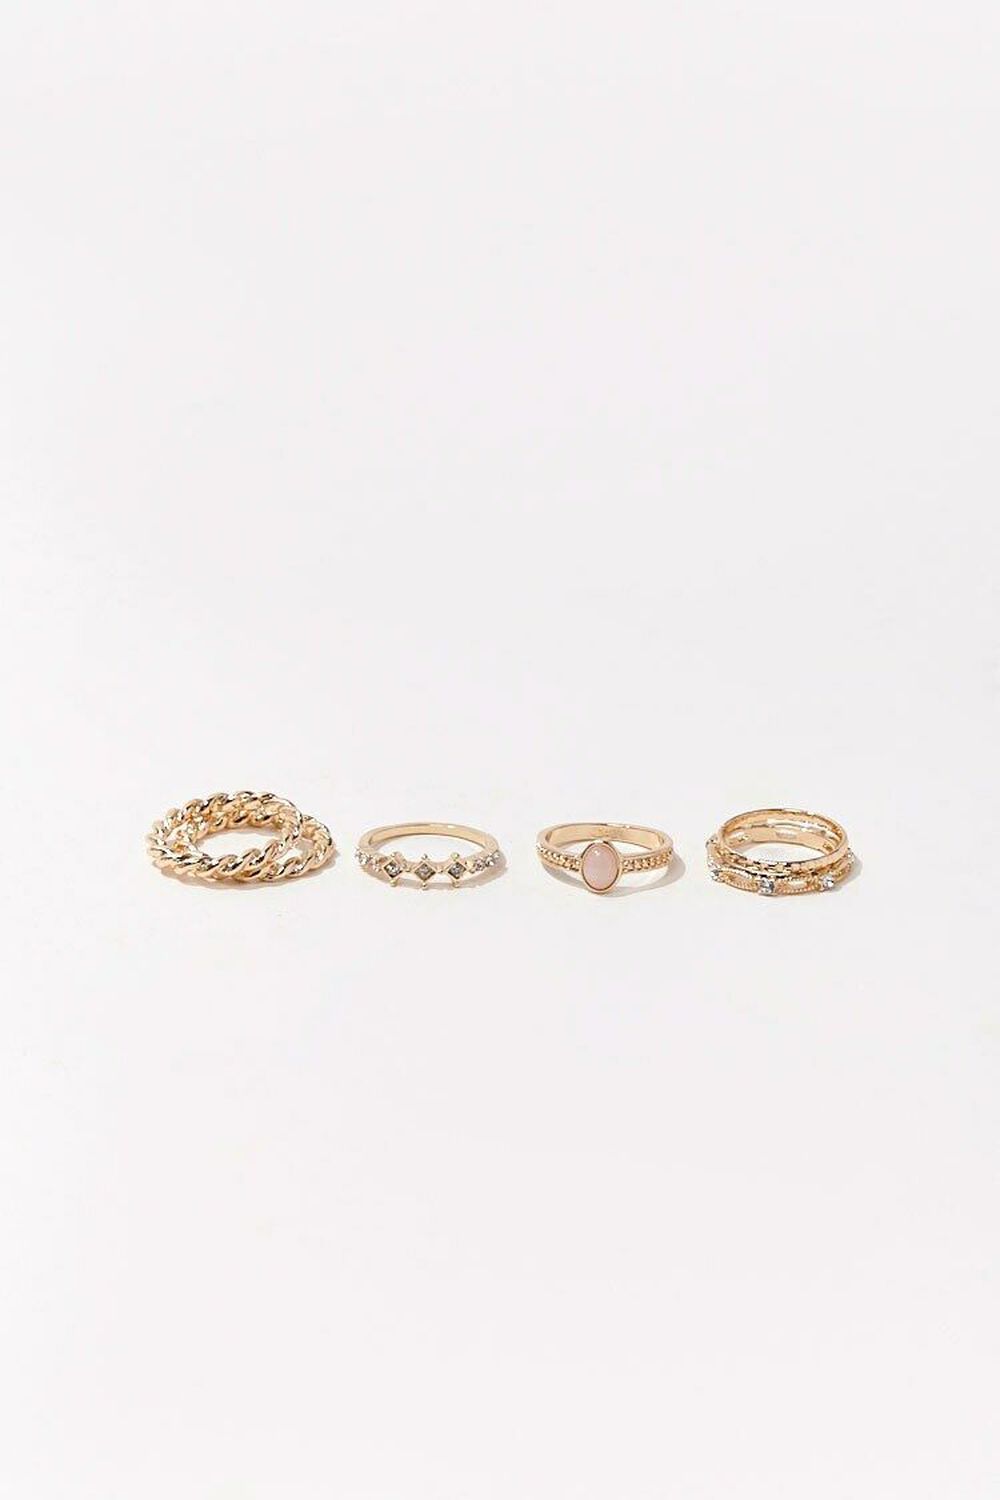 GOLD Etched Ring Set, image 2